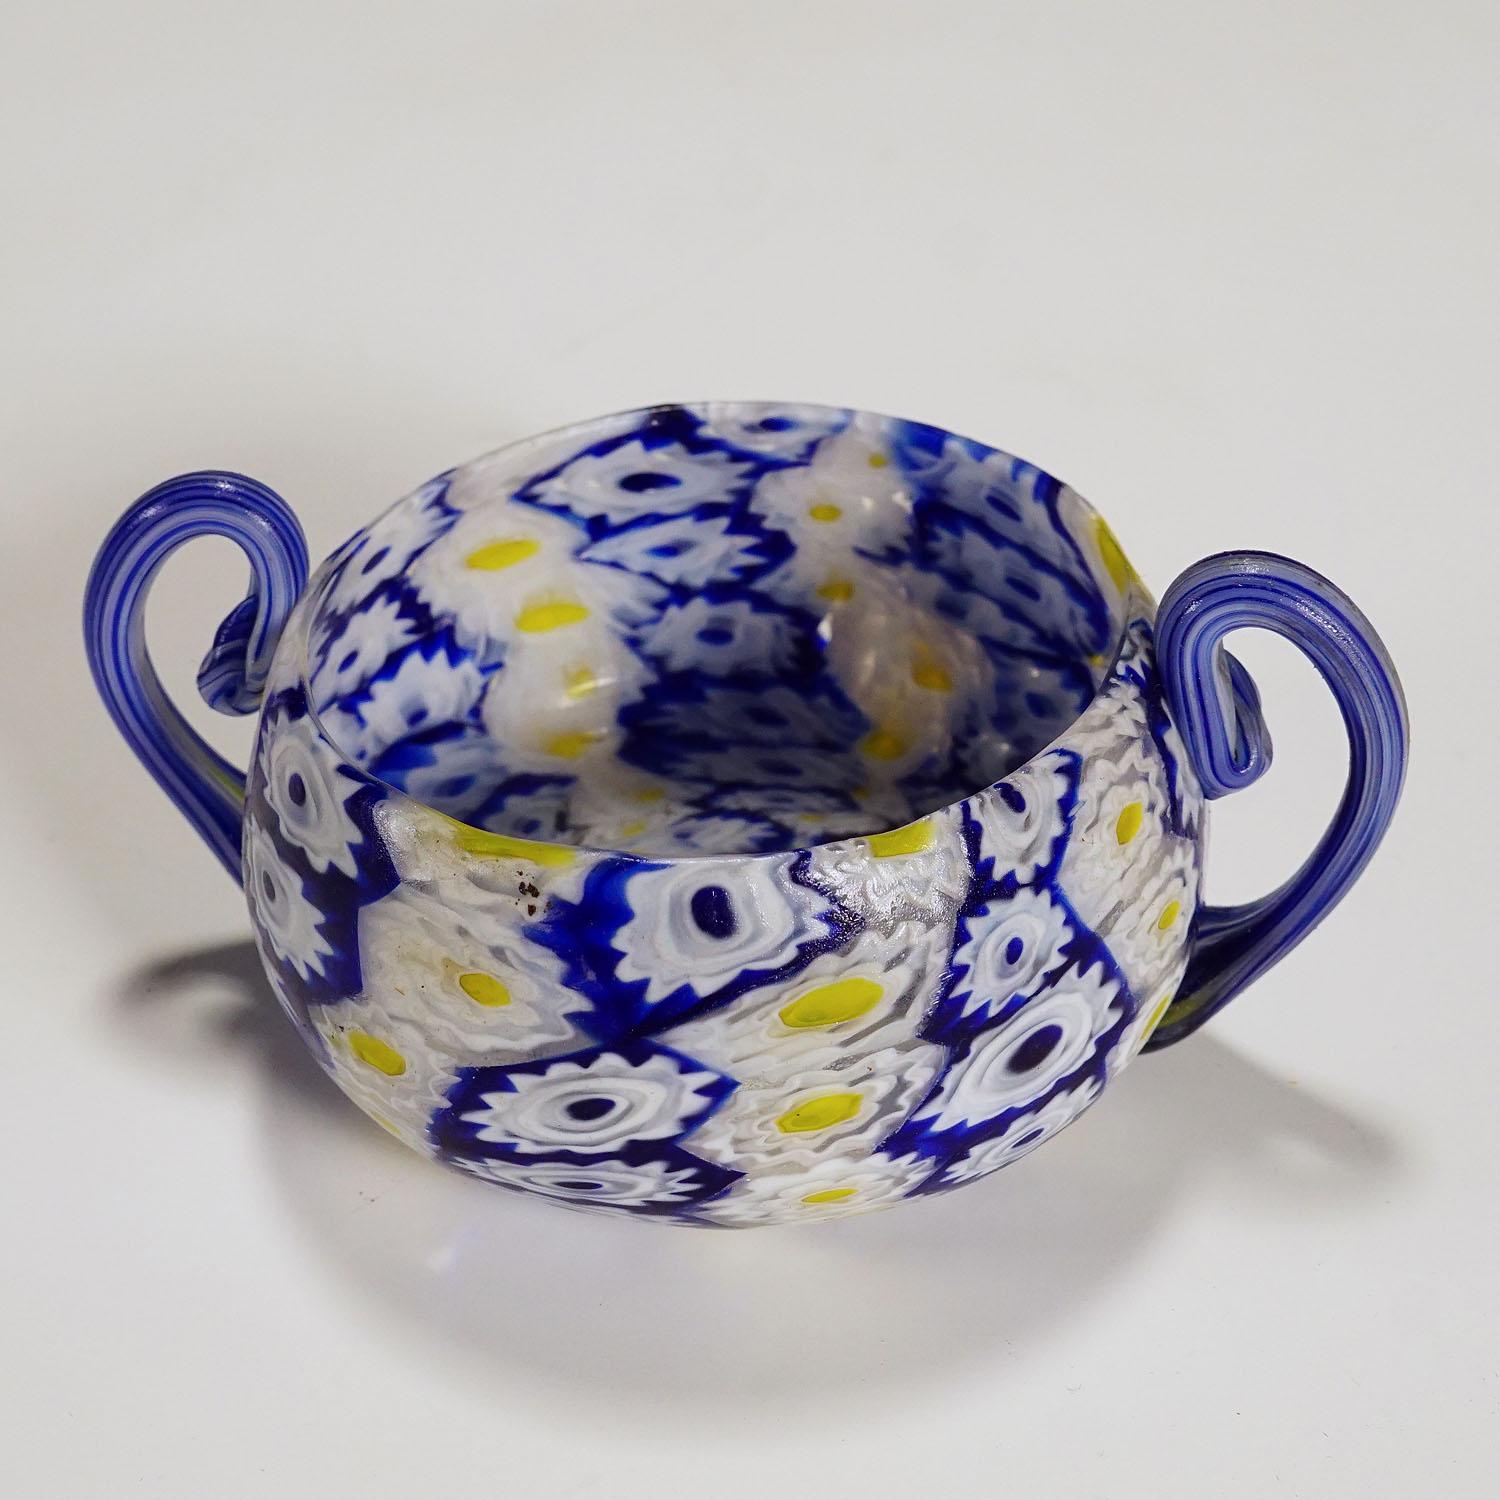 Italian Antique Millefiori Bowl in Blue, Yellow and White, Fratelli Toso Murano 1910 For Sale